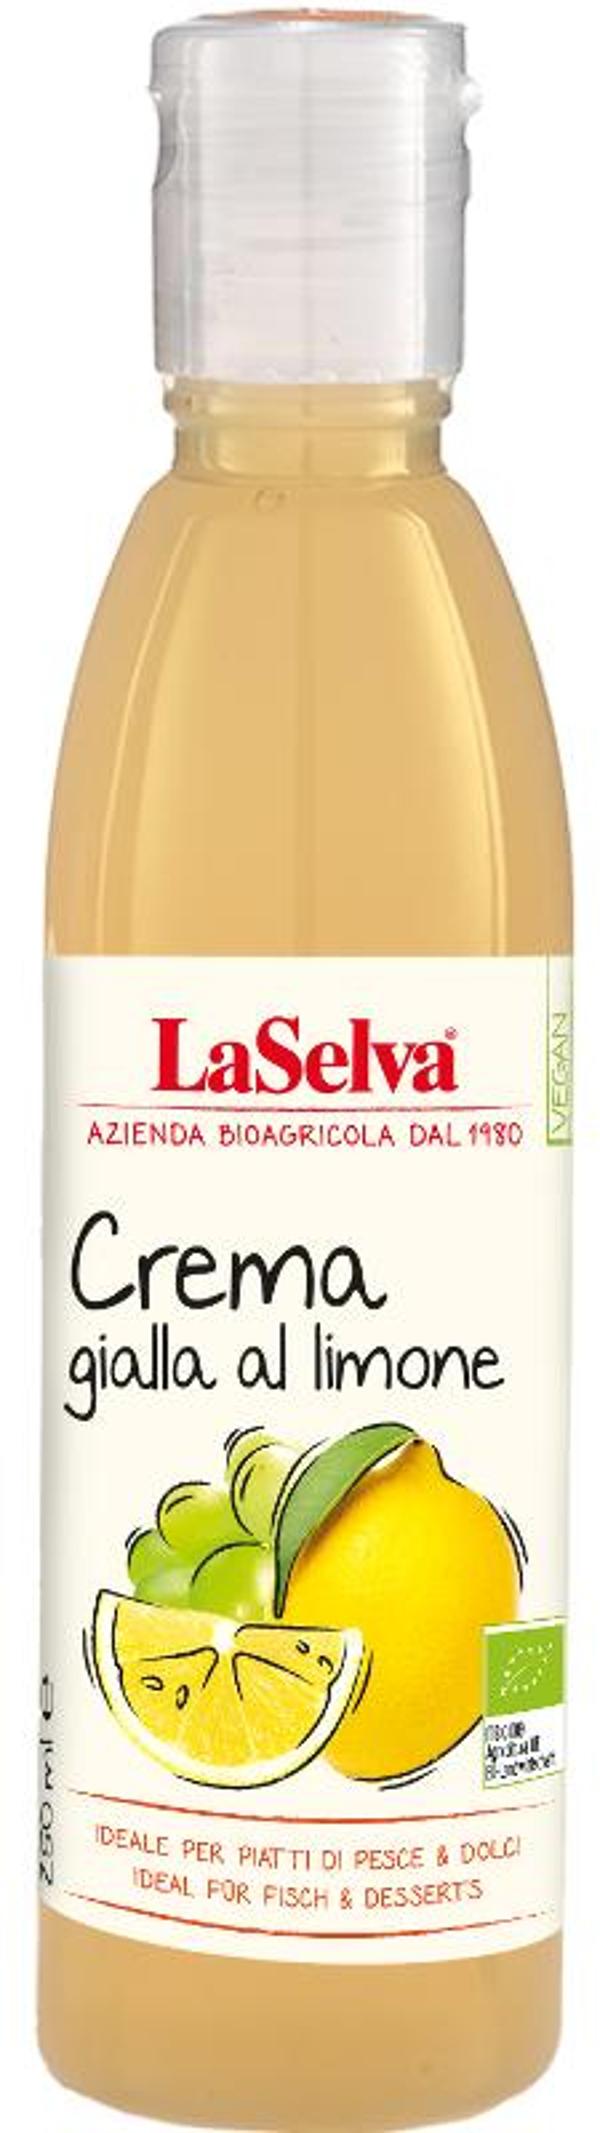 Produktfoto zu Crema gialla al limone 250ml LaSelva